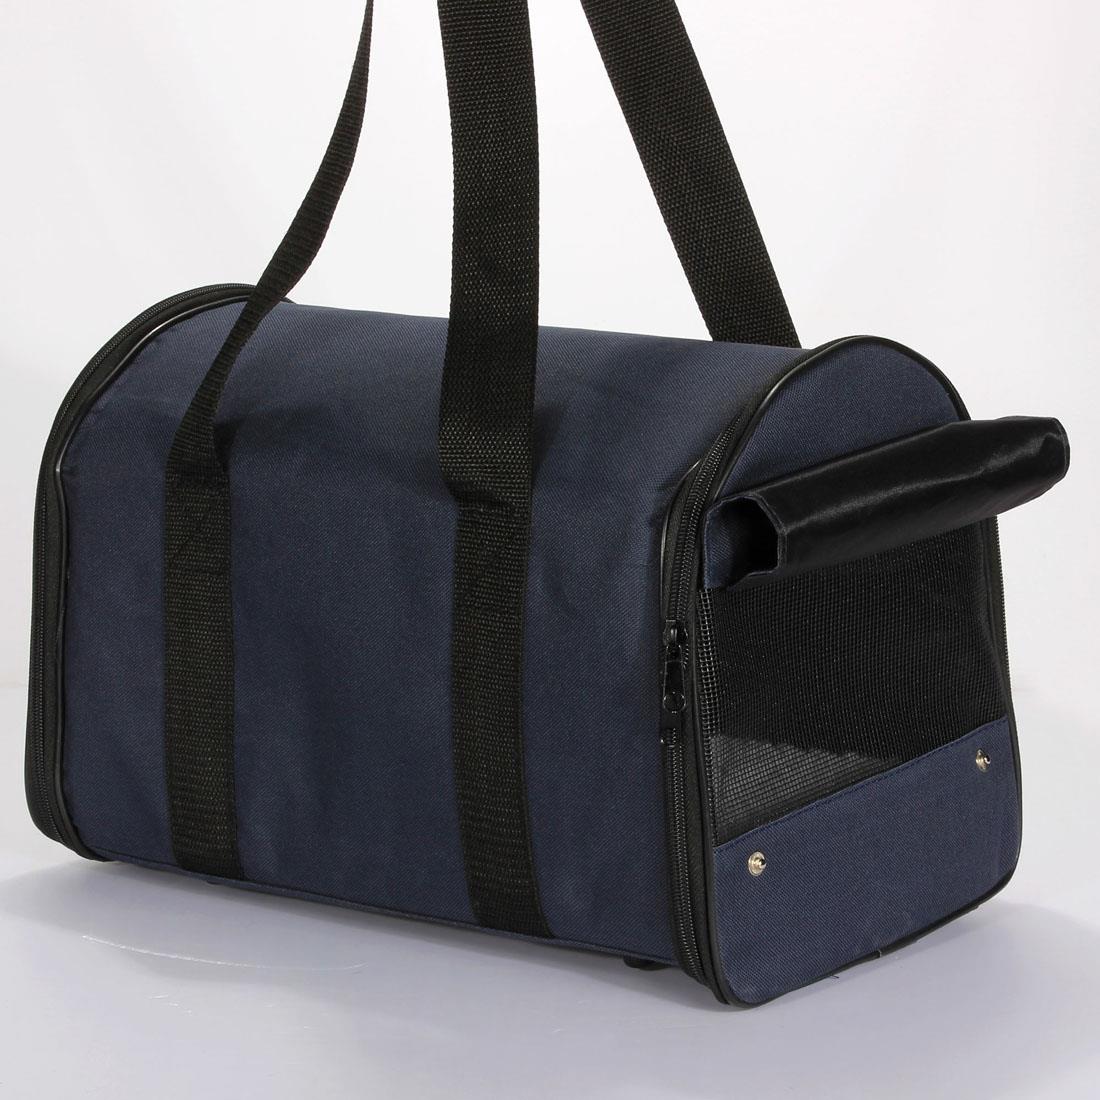 Portable Pet Travel Carrier Cage Kennel Bag Crate (Medium)   Blue